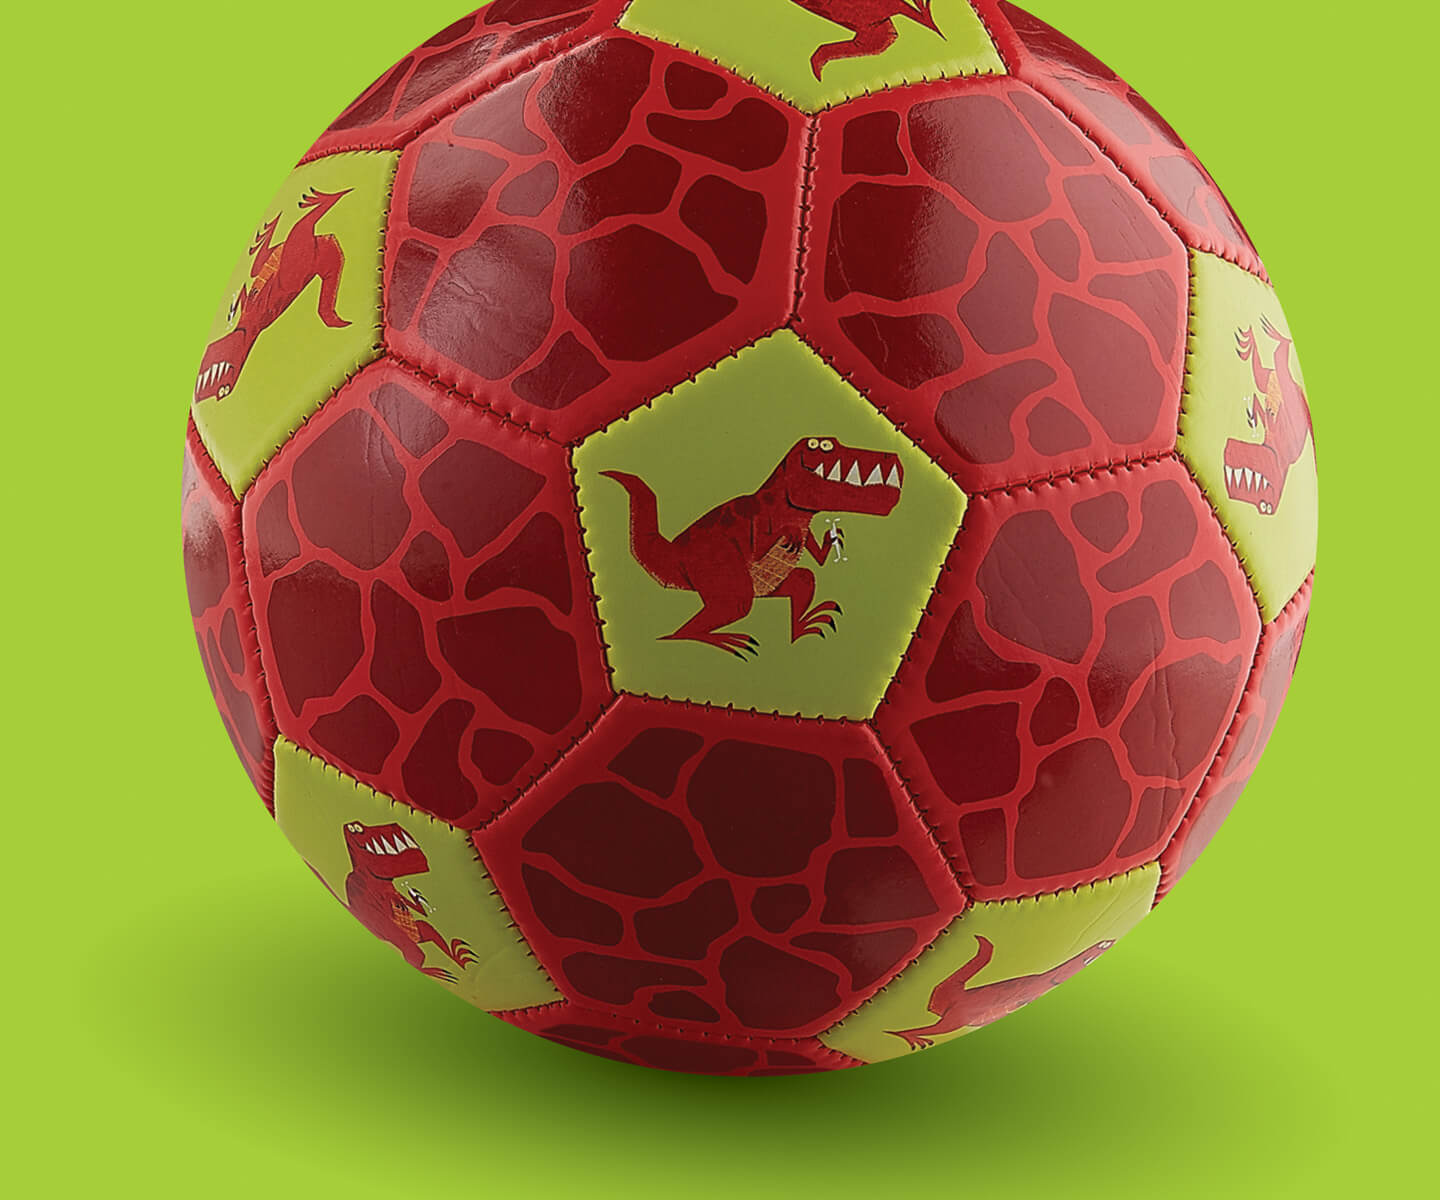 Size 2 Soccer Ball - Solar System